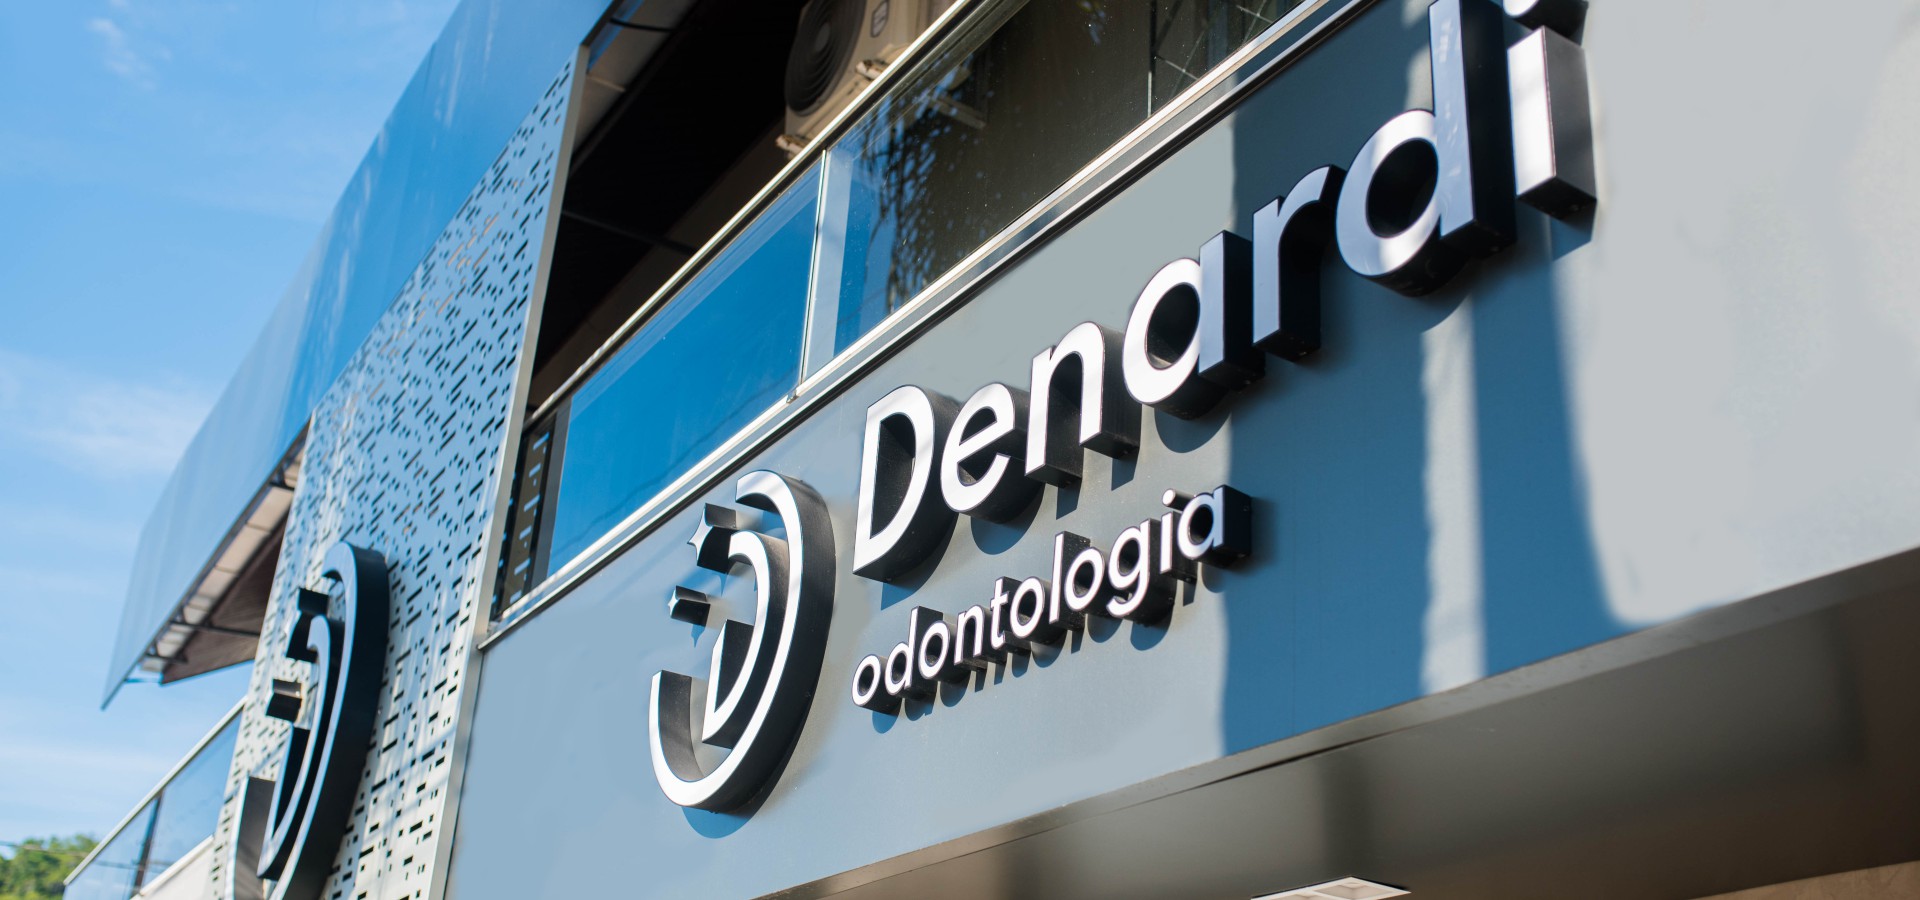 Clínica Denardi Odontologia